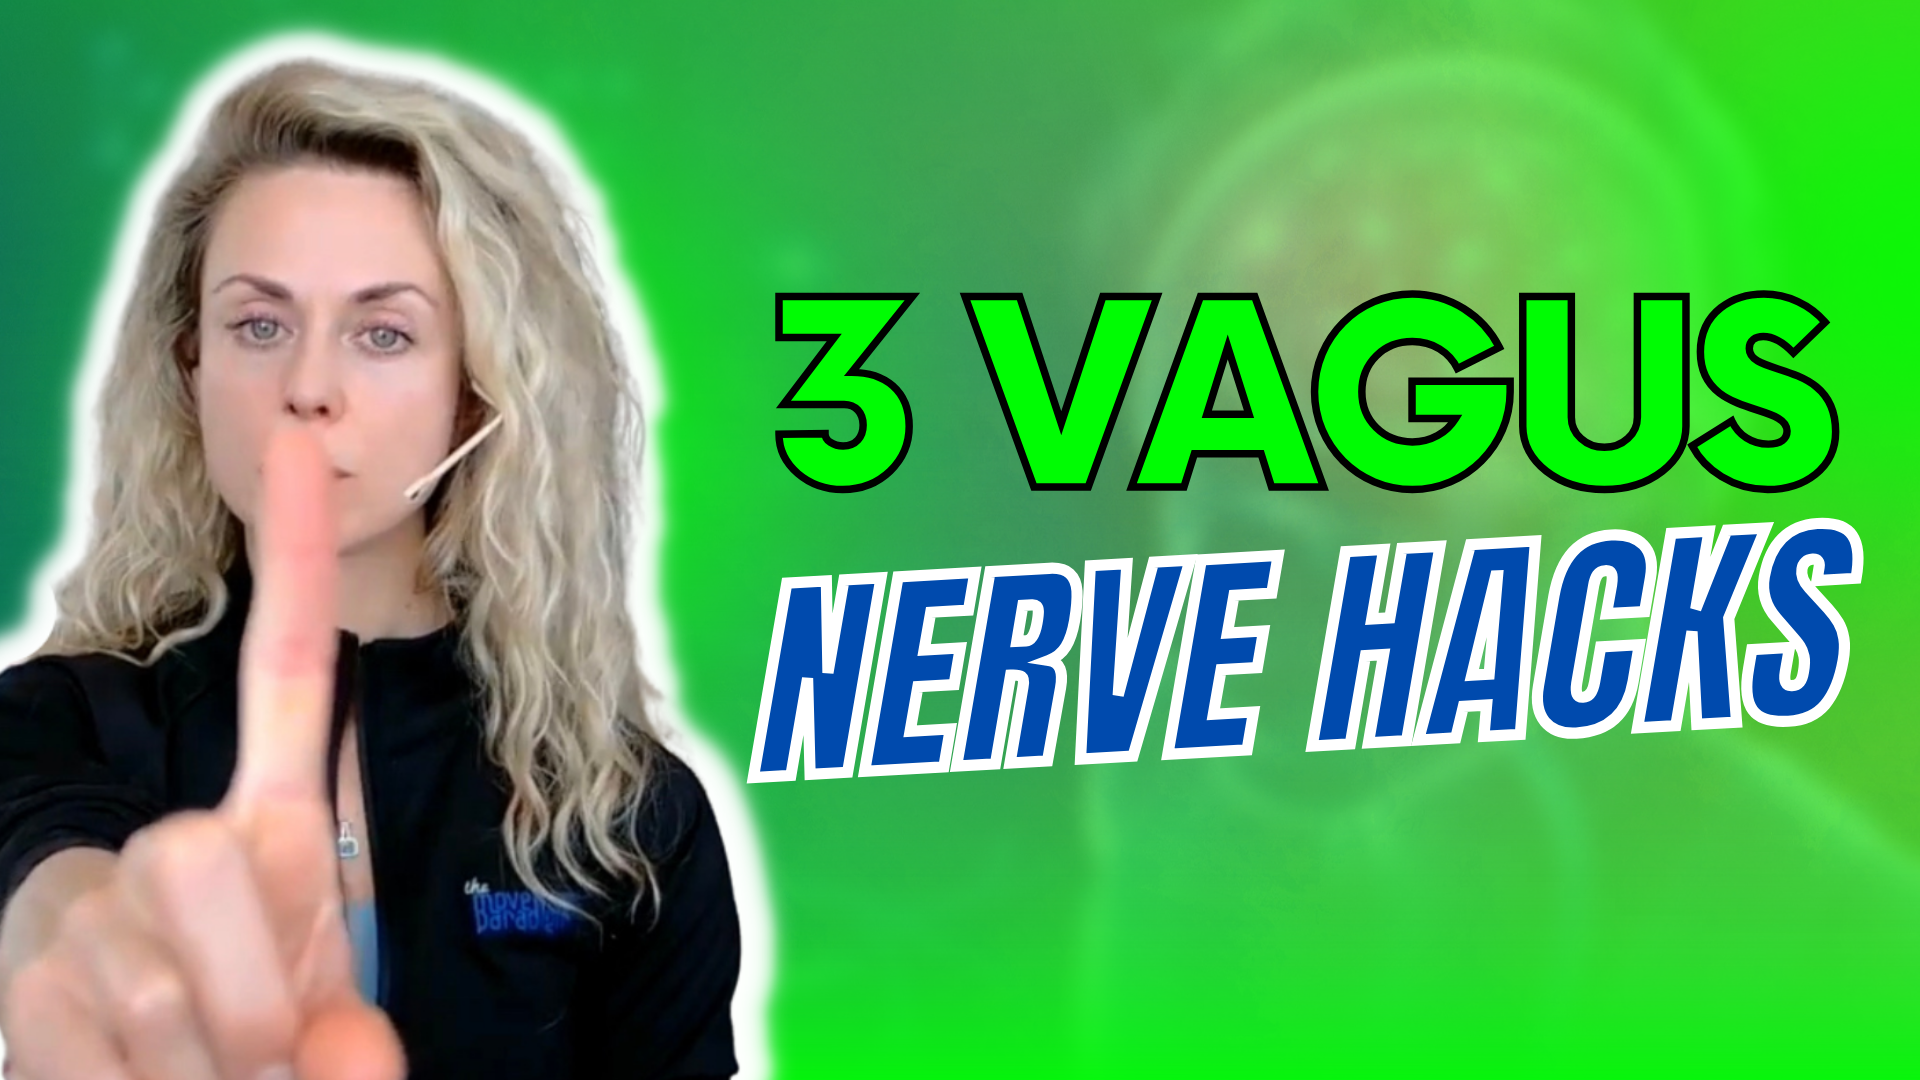 VAGUS NERVE HACKS